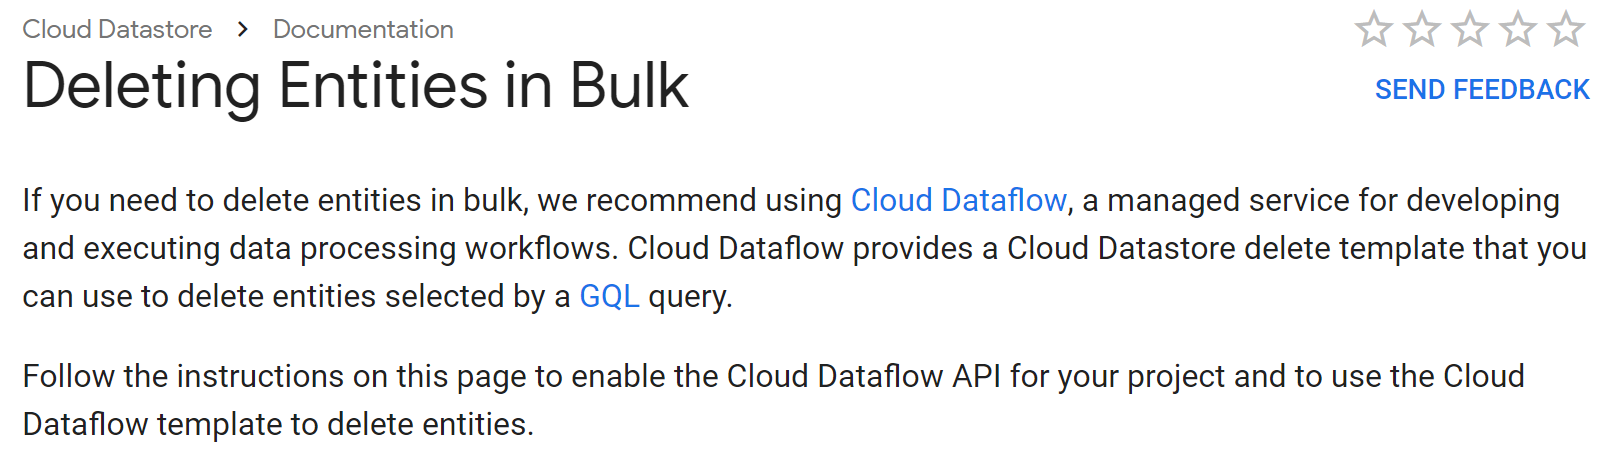 2018-12-17 17_00_13-Deleting Entities in Bulk  _  Cloud Datastore Documentation  _  Google Cloud.png